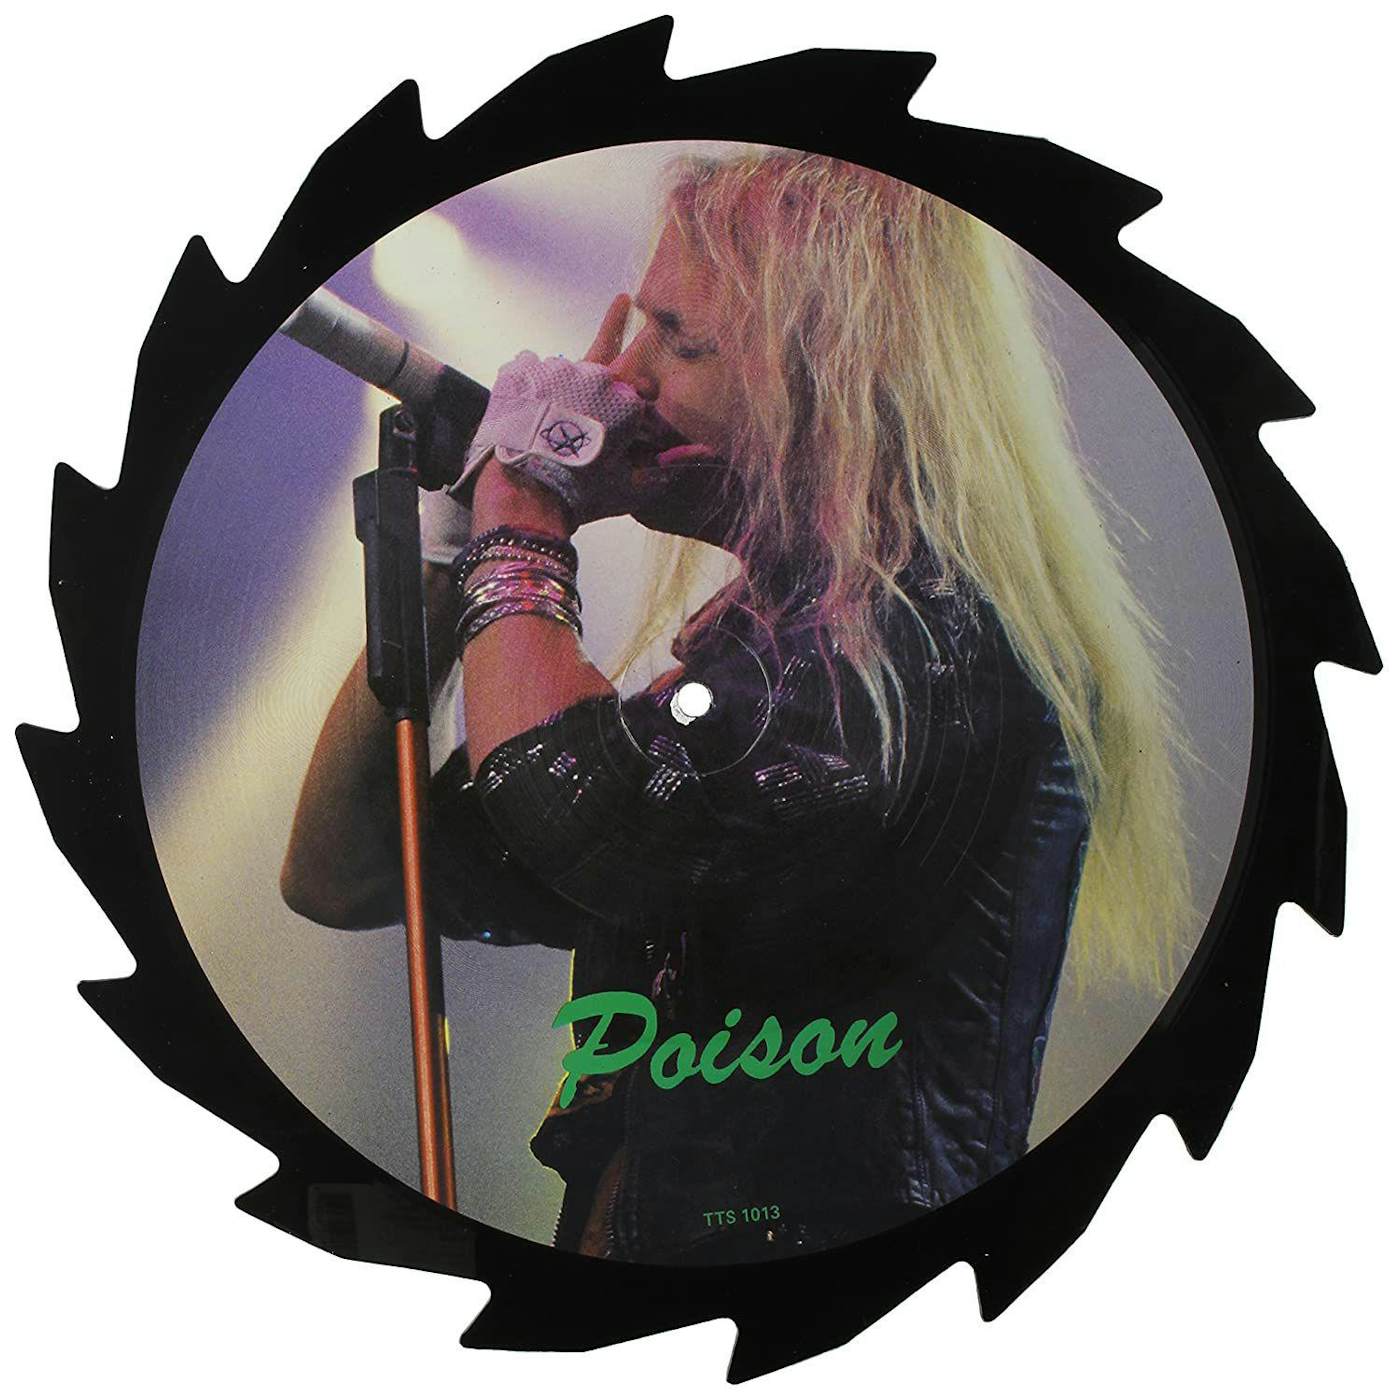 Poison INTERVIEW (PICTURE DISC) Vinyl Record